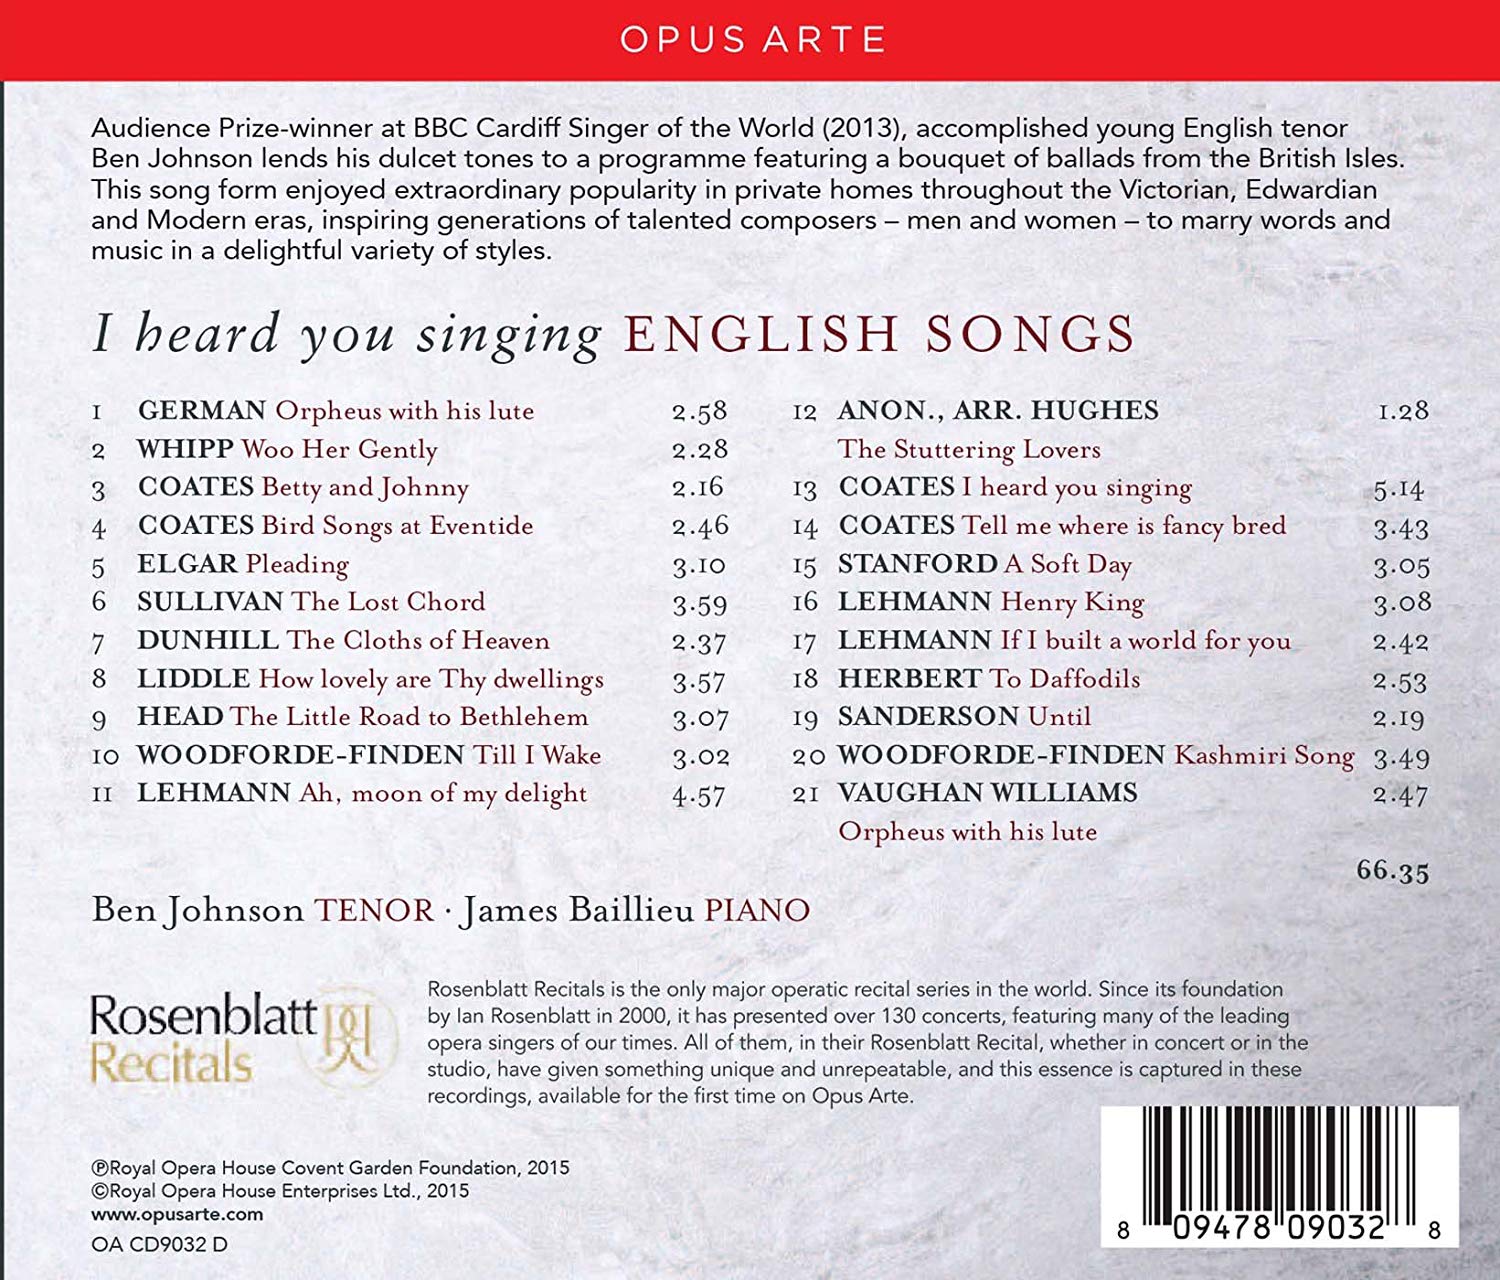 I heard you singing - English Songs - slide-1